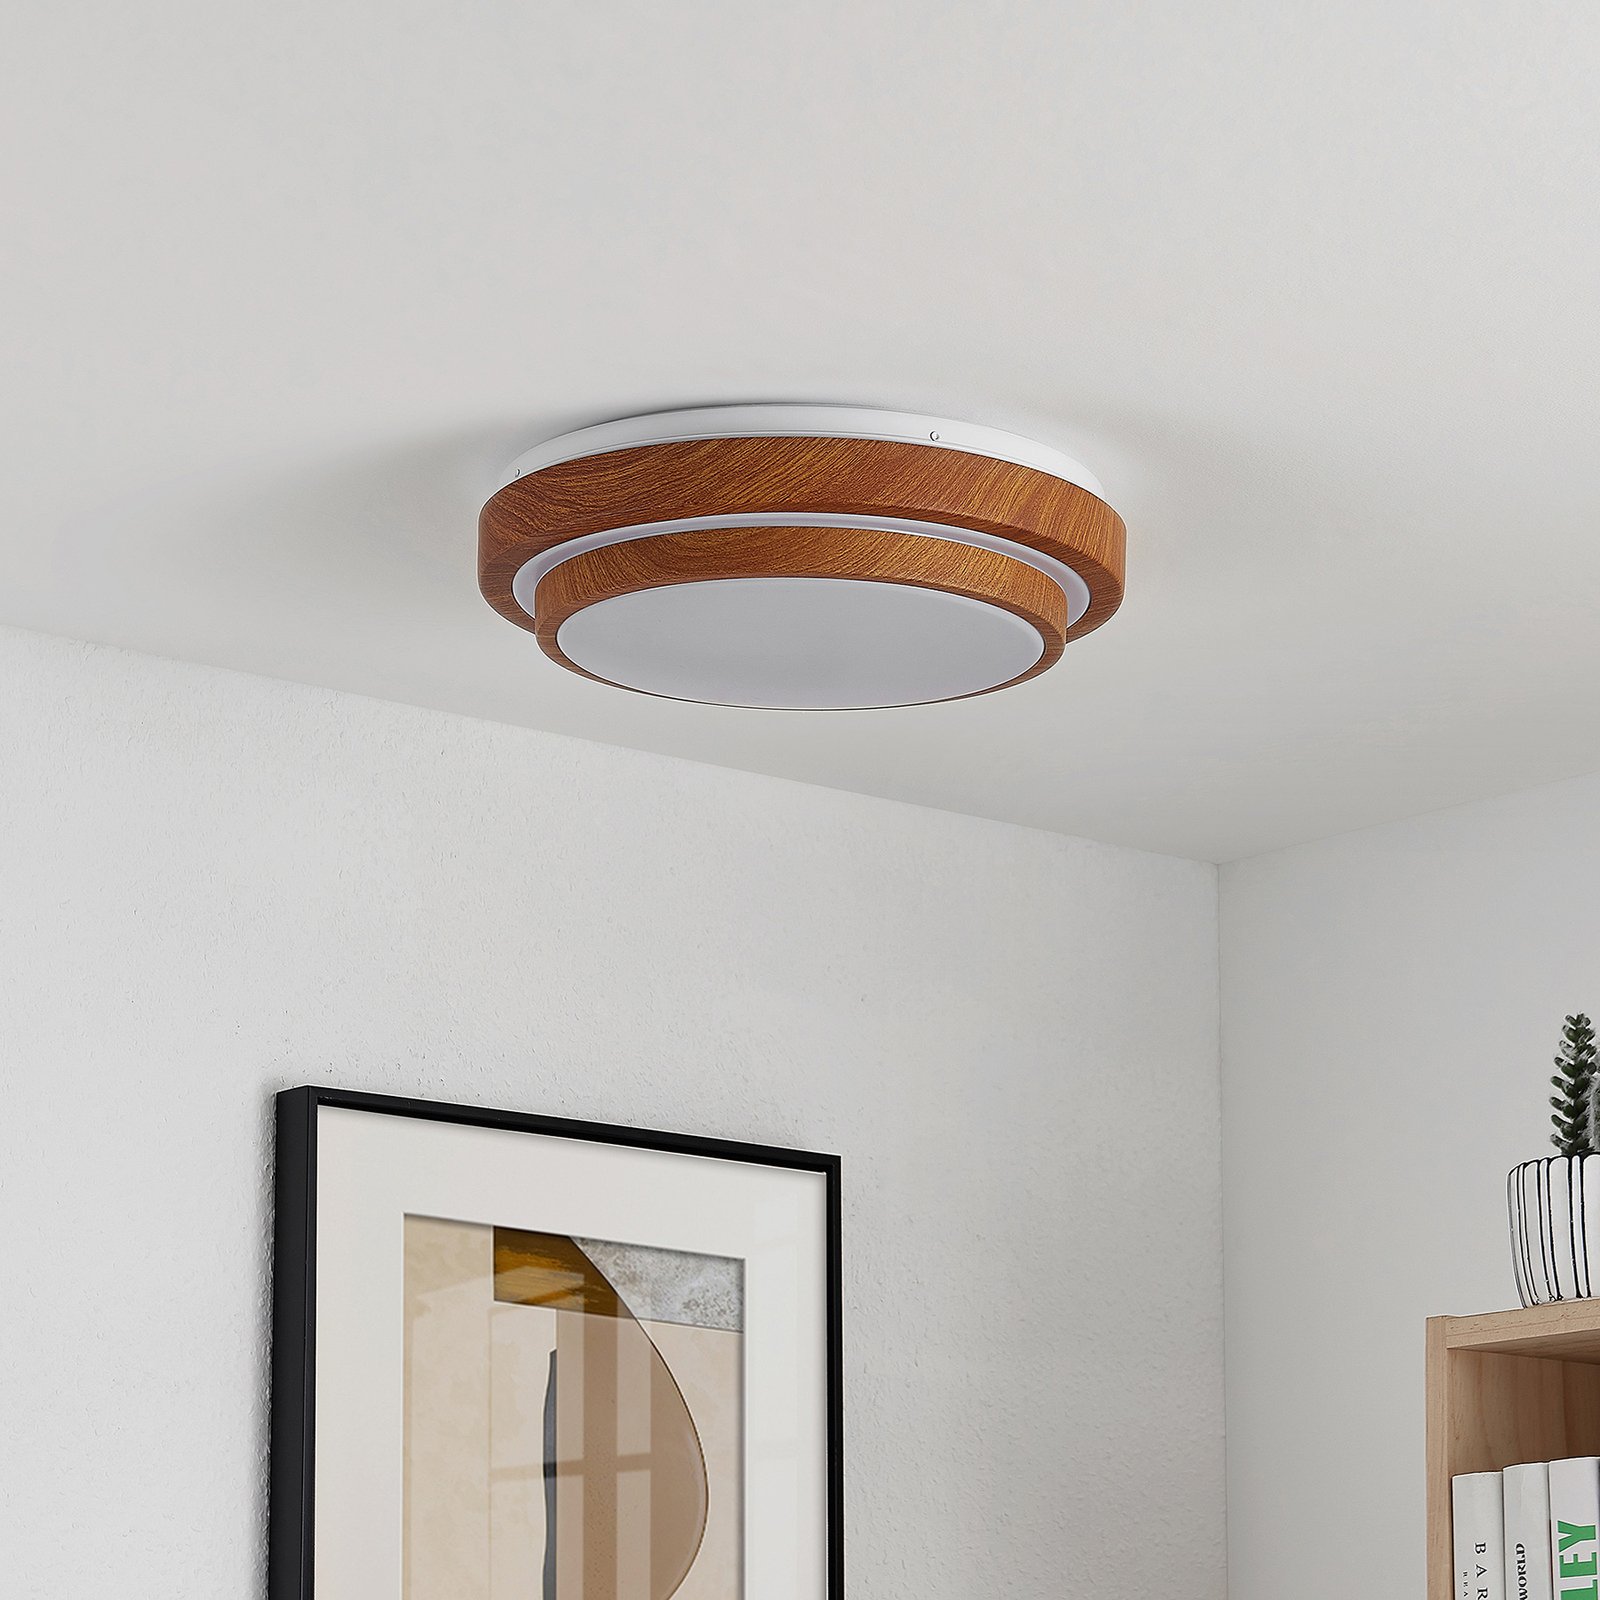 Lindby Vaako LED ceiling light, round, 34 cm